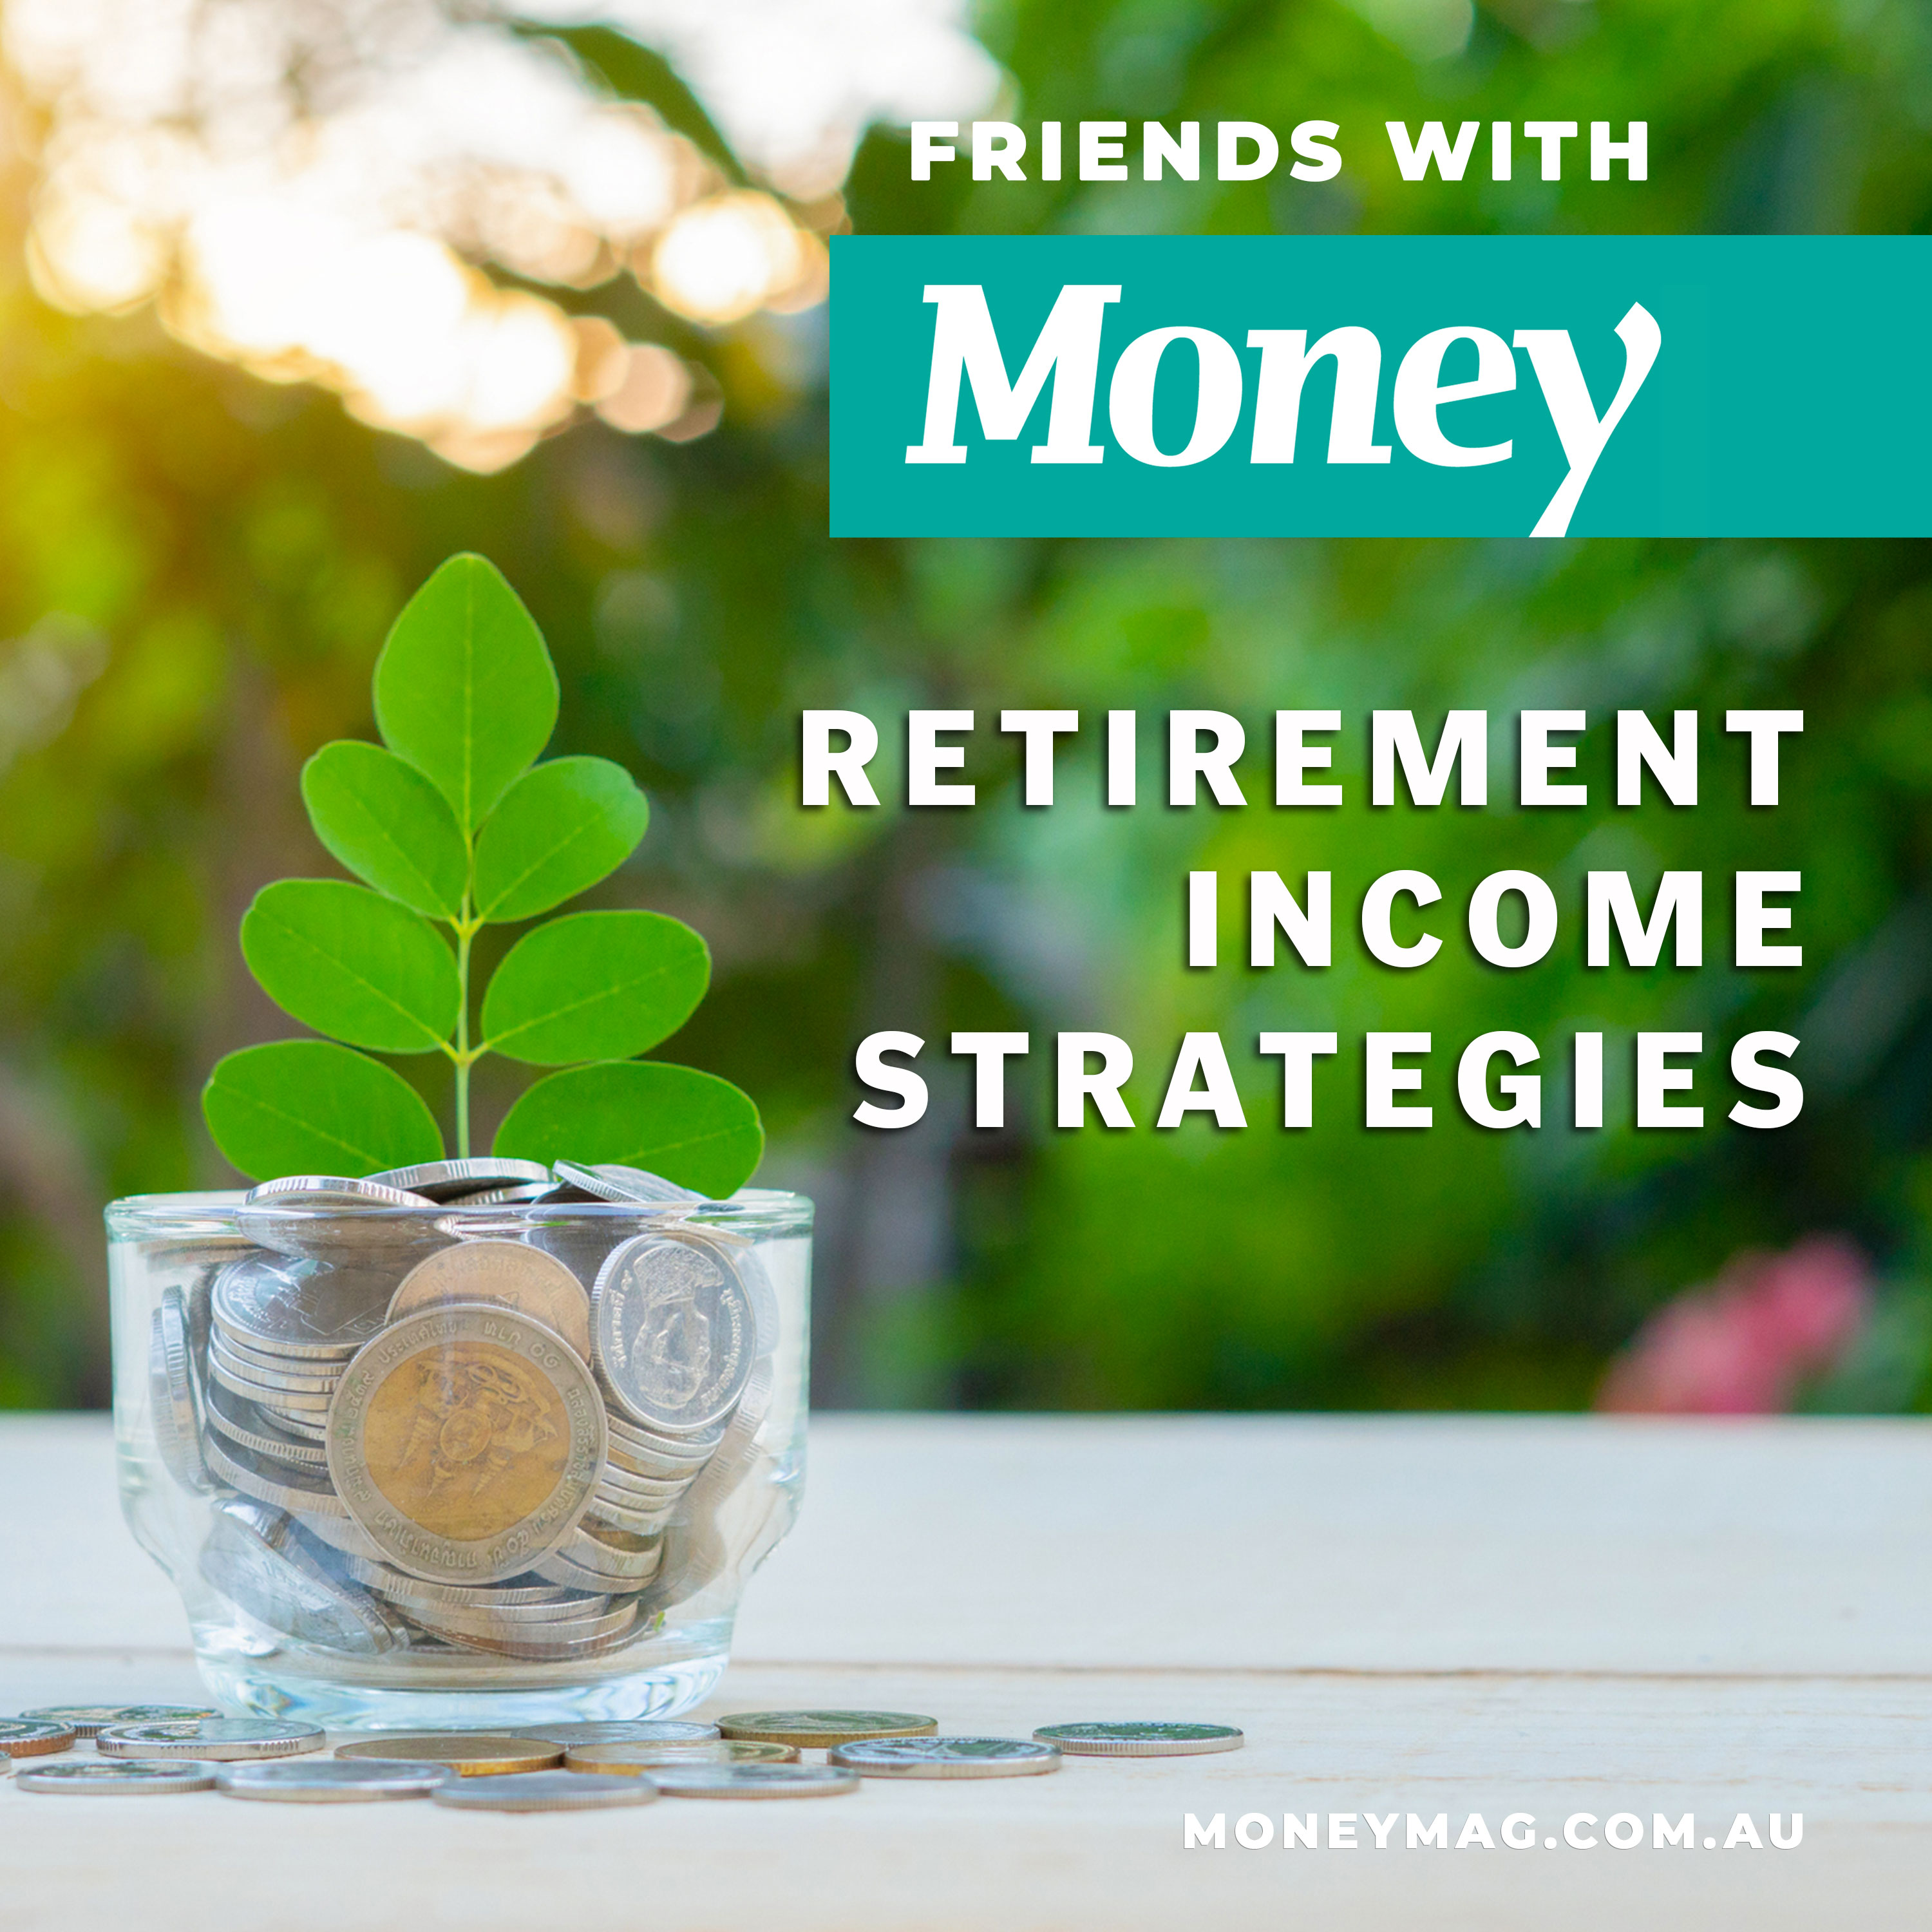 Retirement income strategies